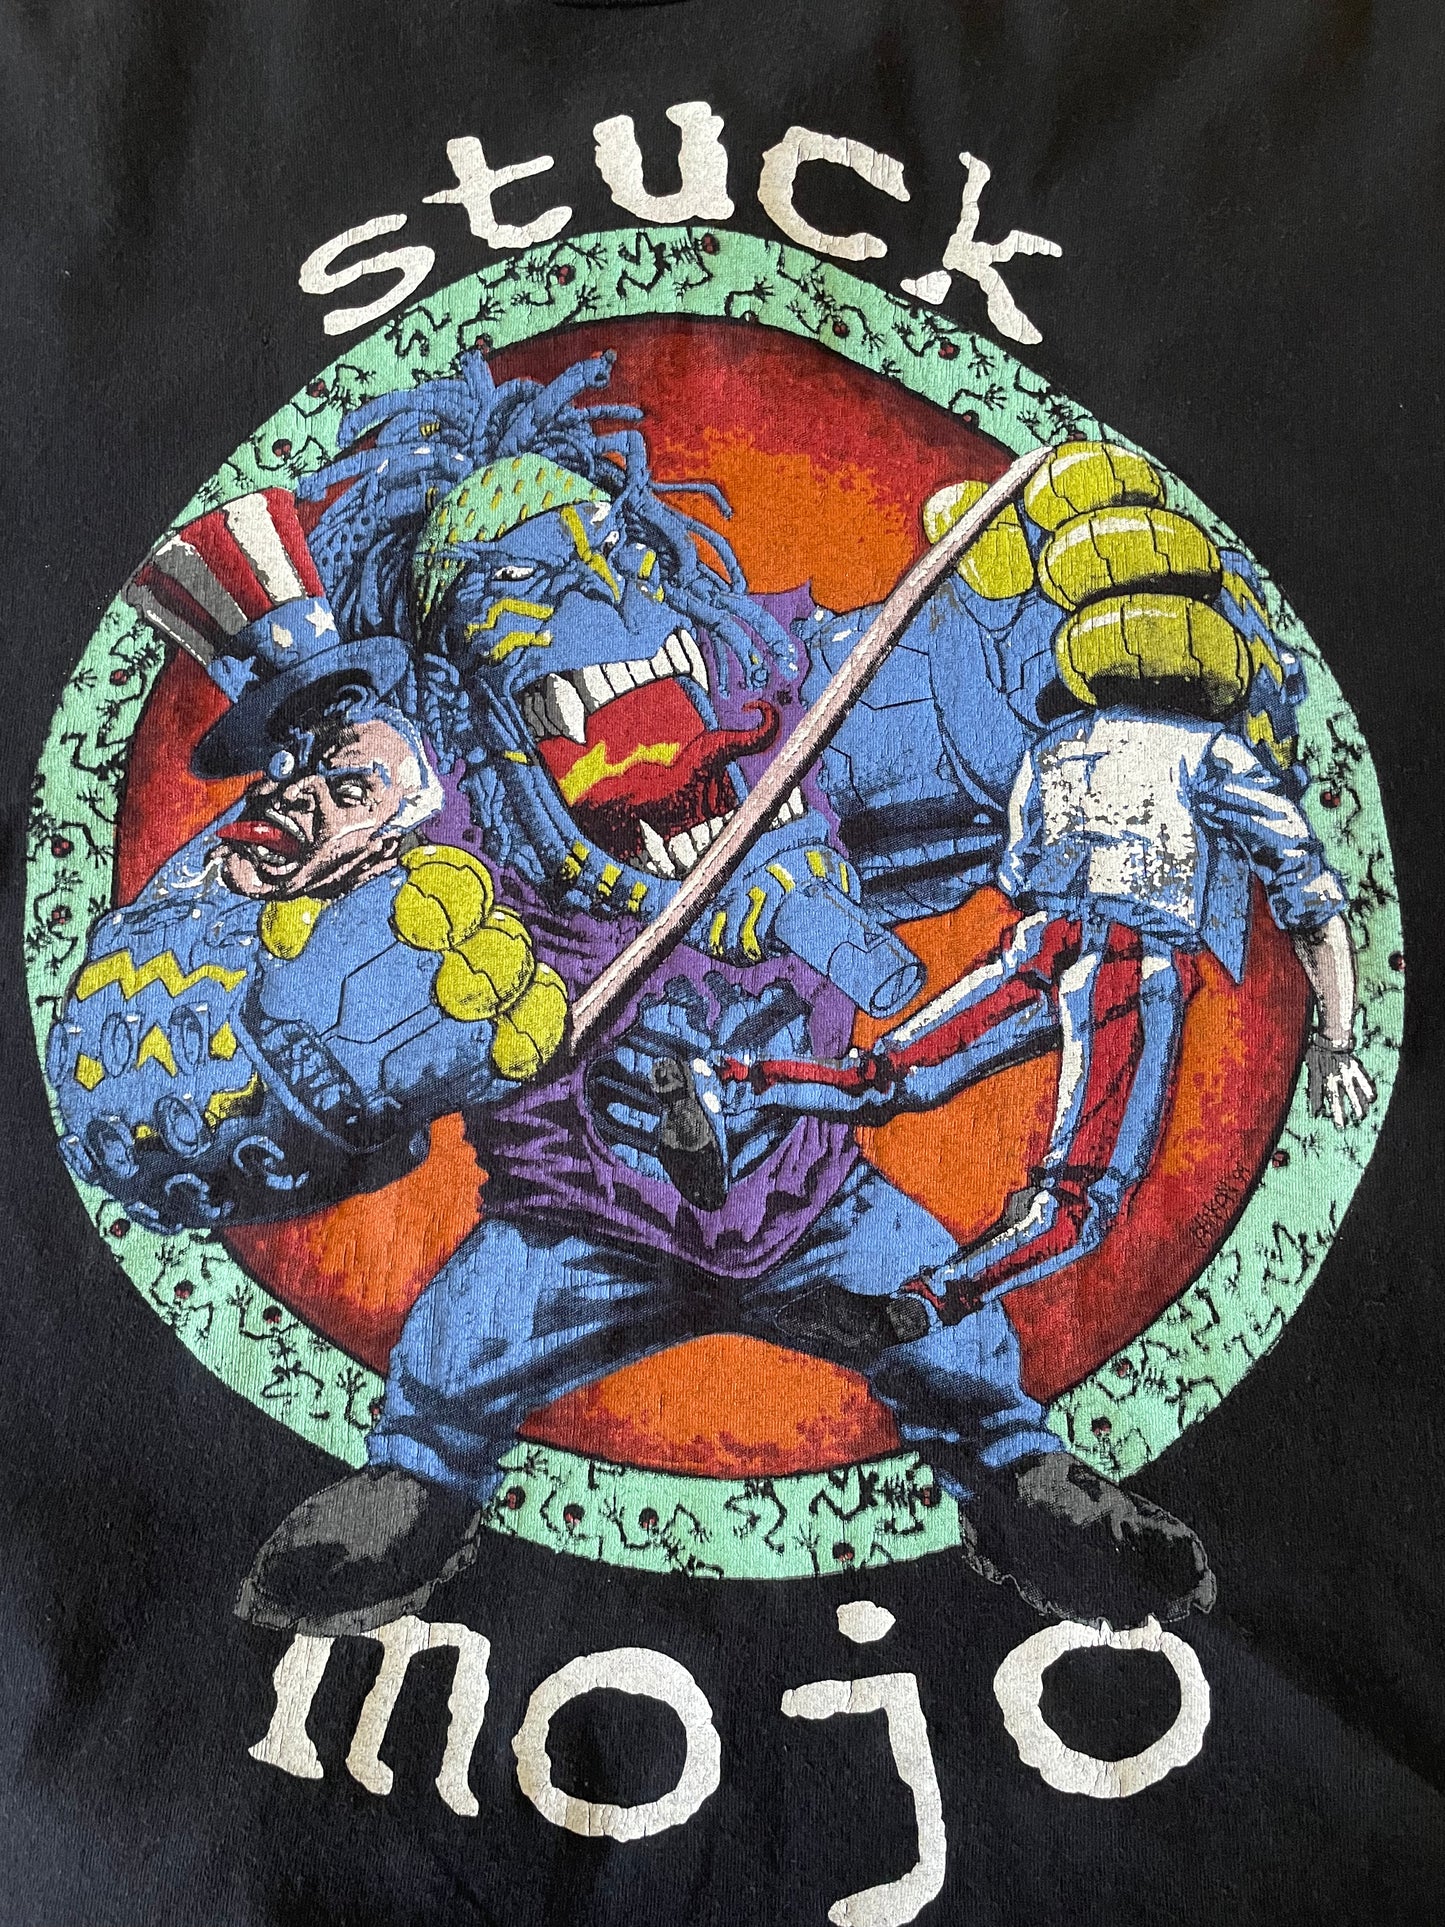 Stuck Mojo - Snappin’ Necks - Original Vintage 1995 t-shirt